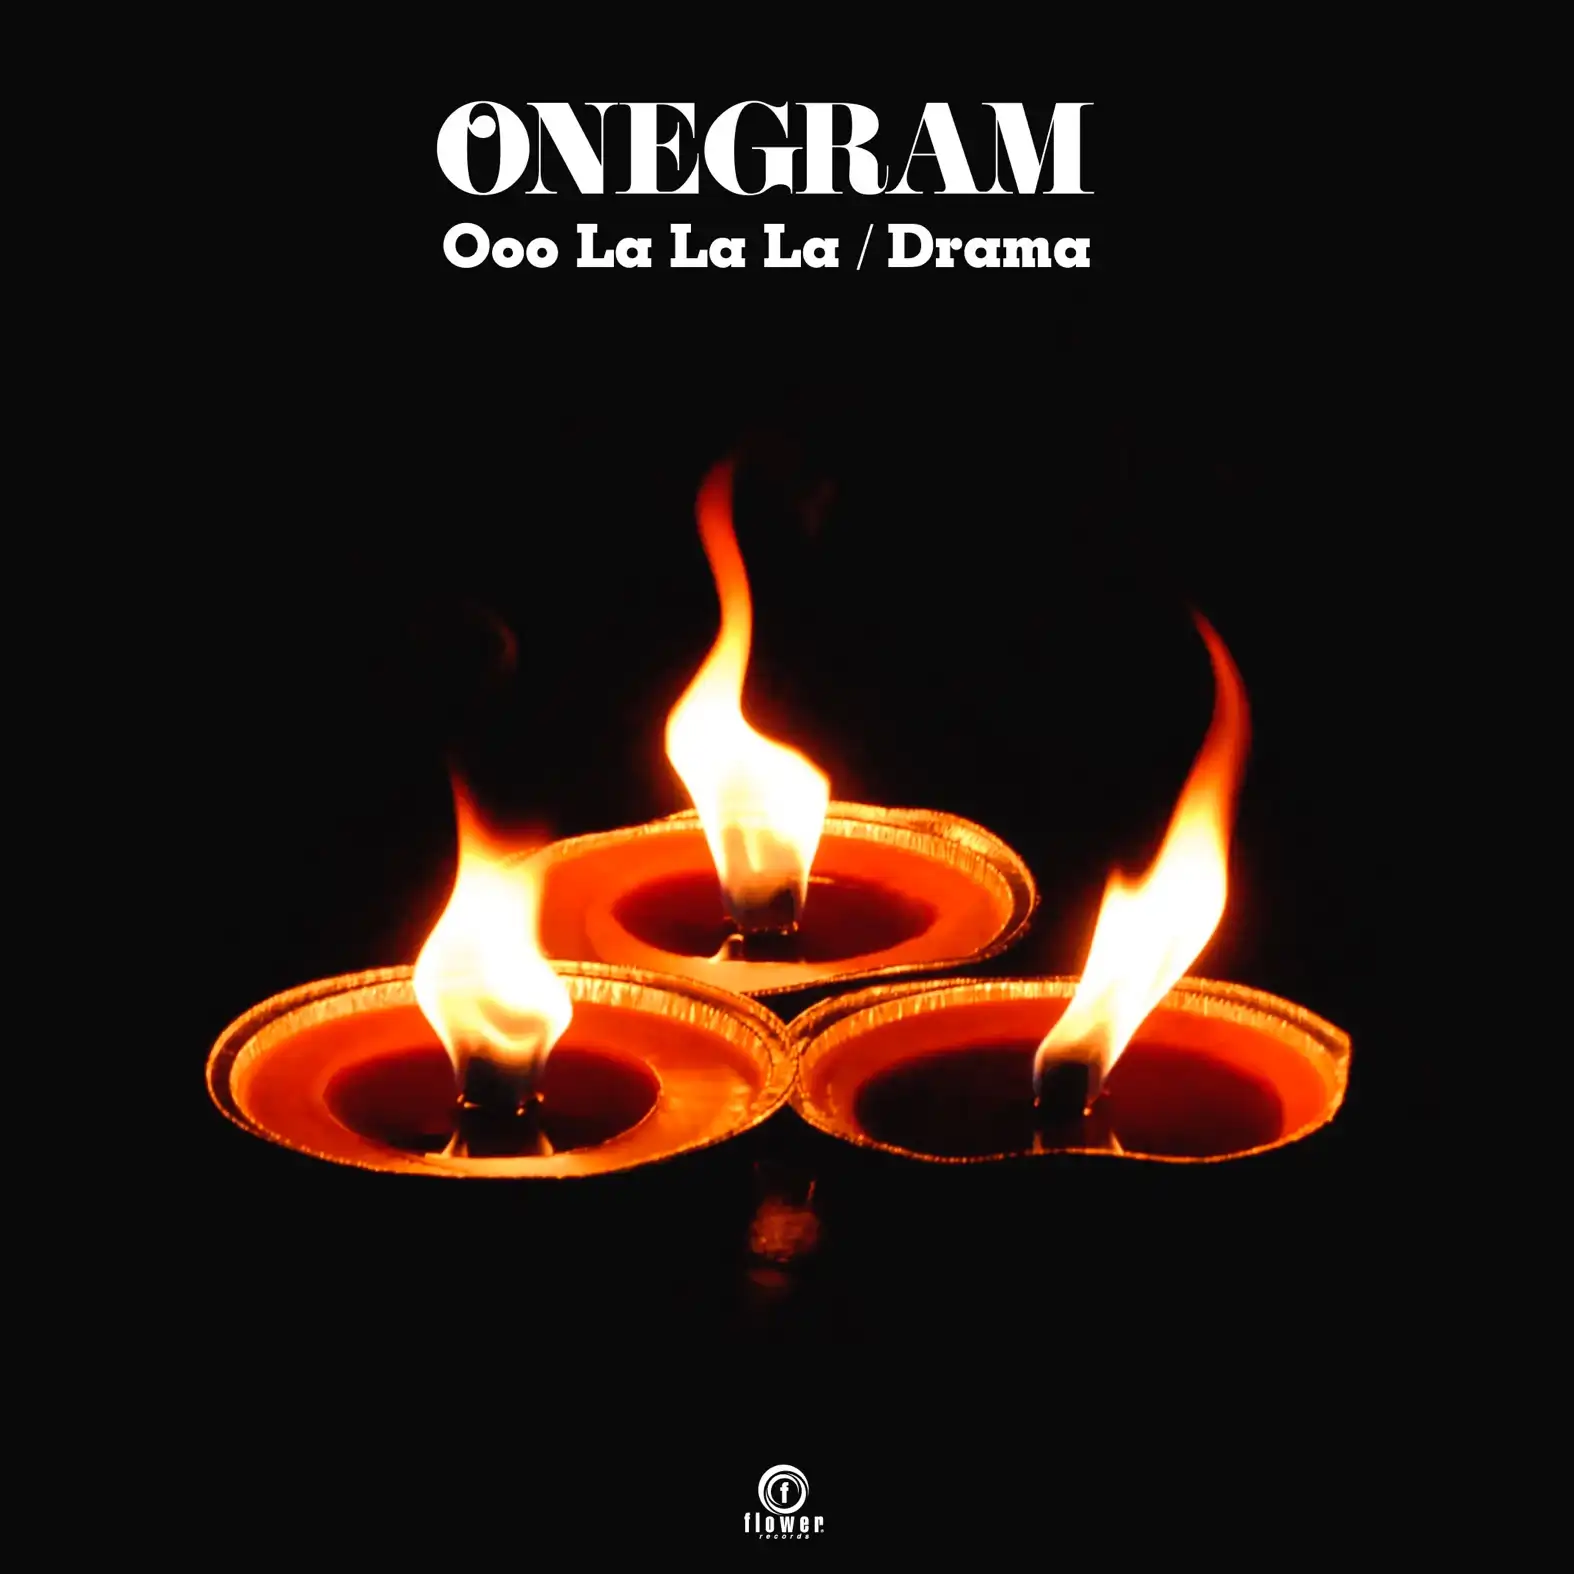 ONEGRAM / OOO LA LA LA  DRAMA